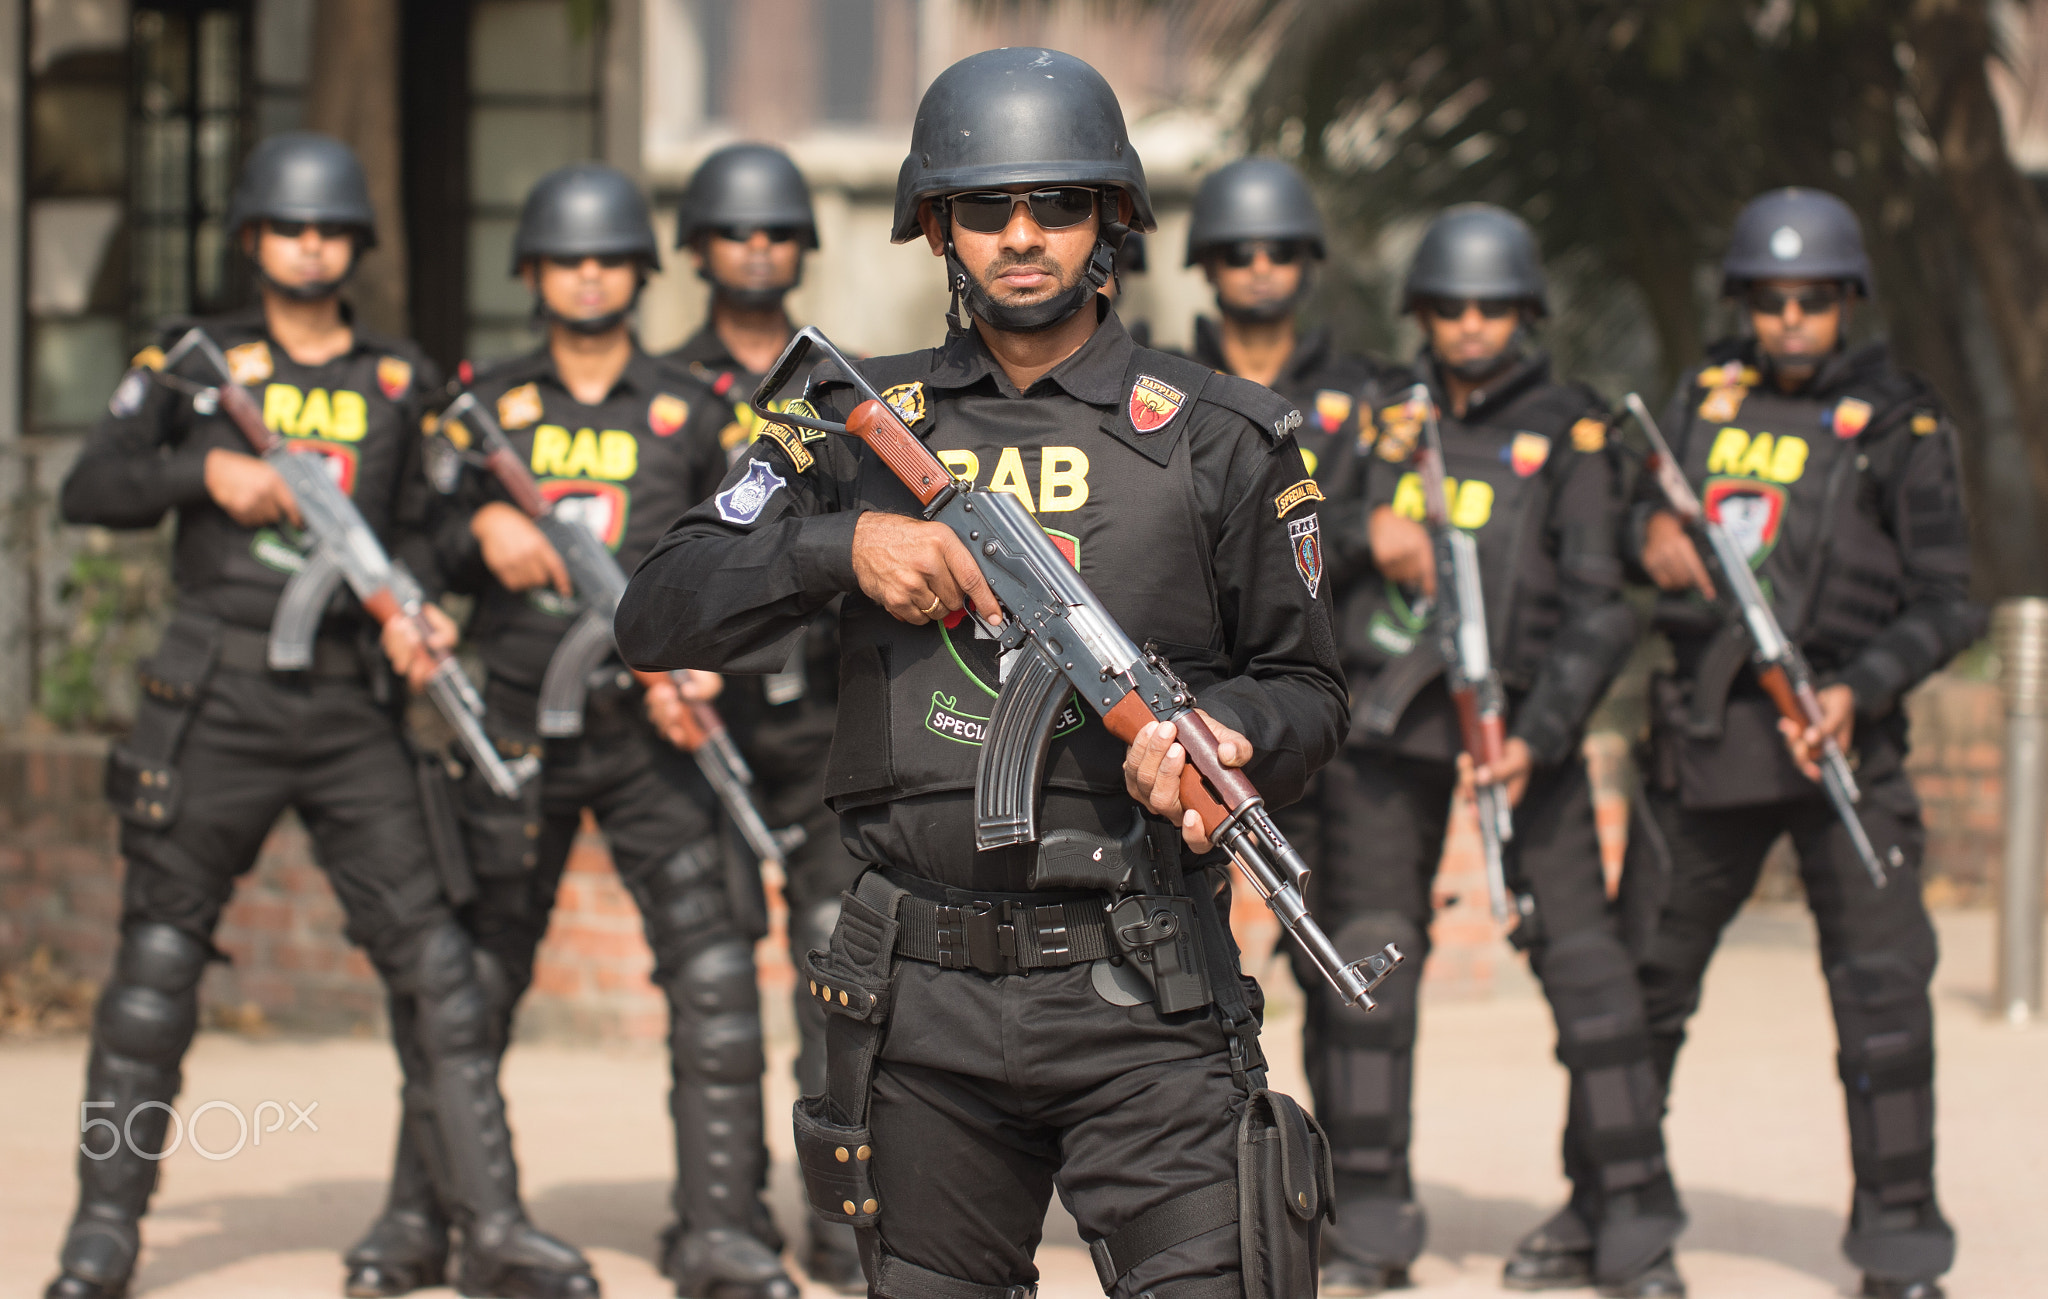 Rapid Action Battalion (RAB) Bangladesh